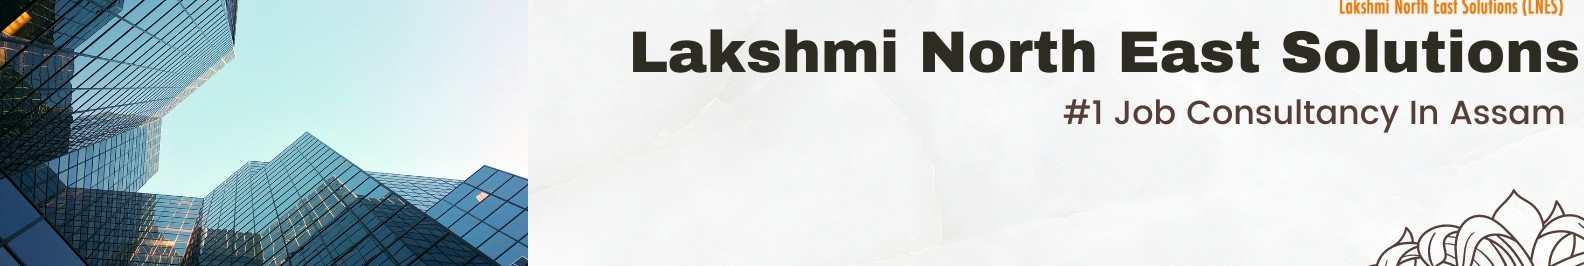 Lakshmi North East Solutions background